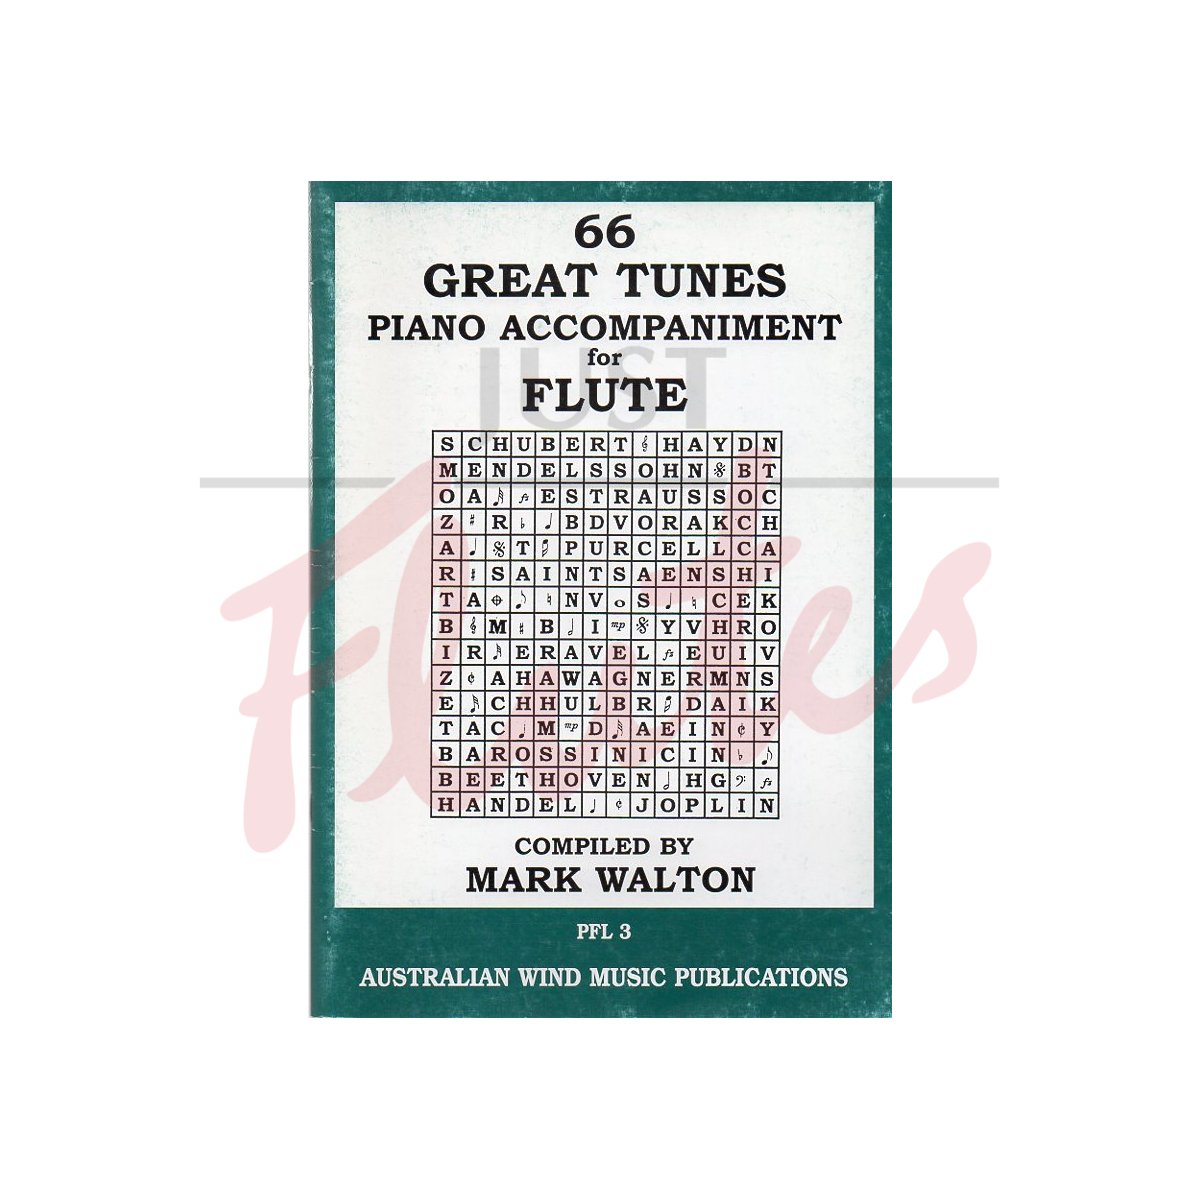 66 Great Tunes for Flute [Piano Accompaniment Book]